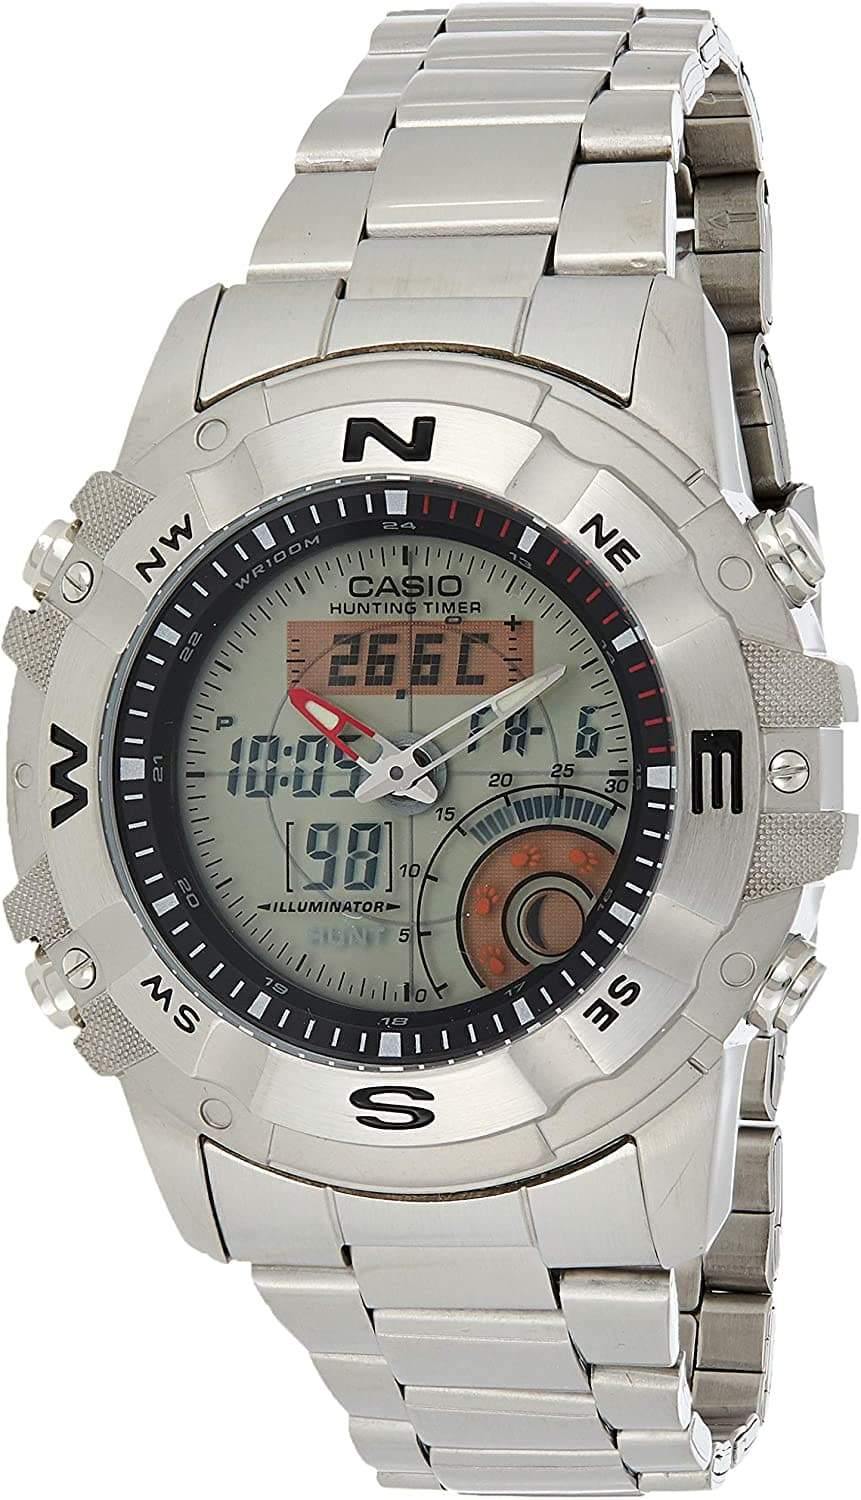 Casio Outgear Hunting Timer Moon Phase Anadigi Stainless Steel Watch AMW-704-7AV - Diligence1International